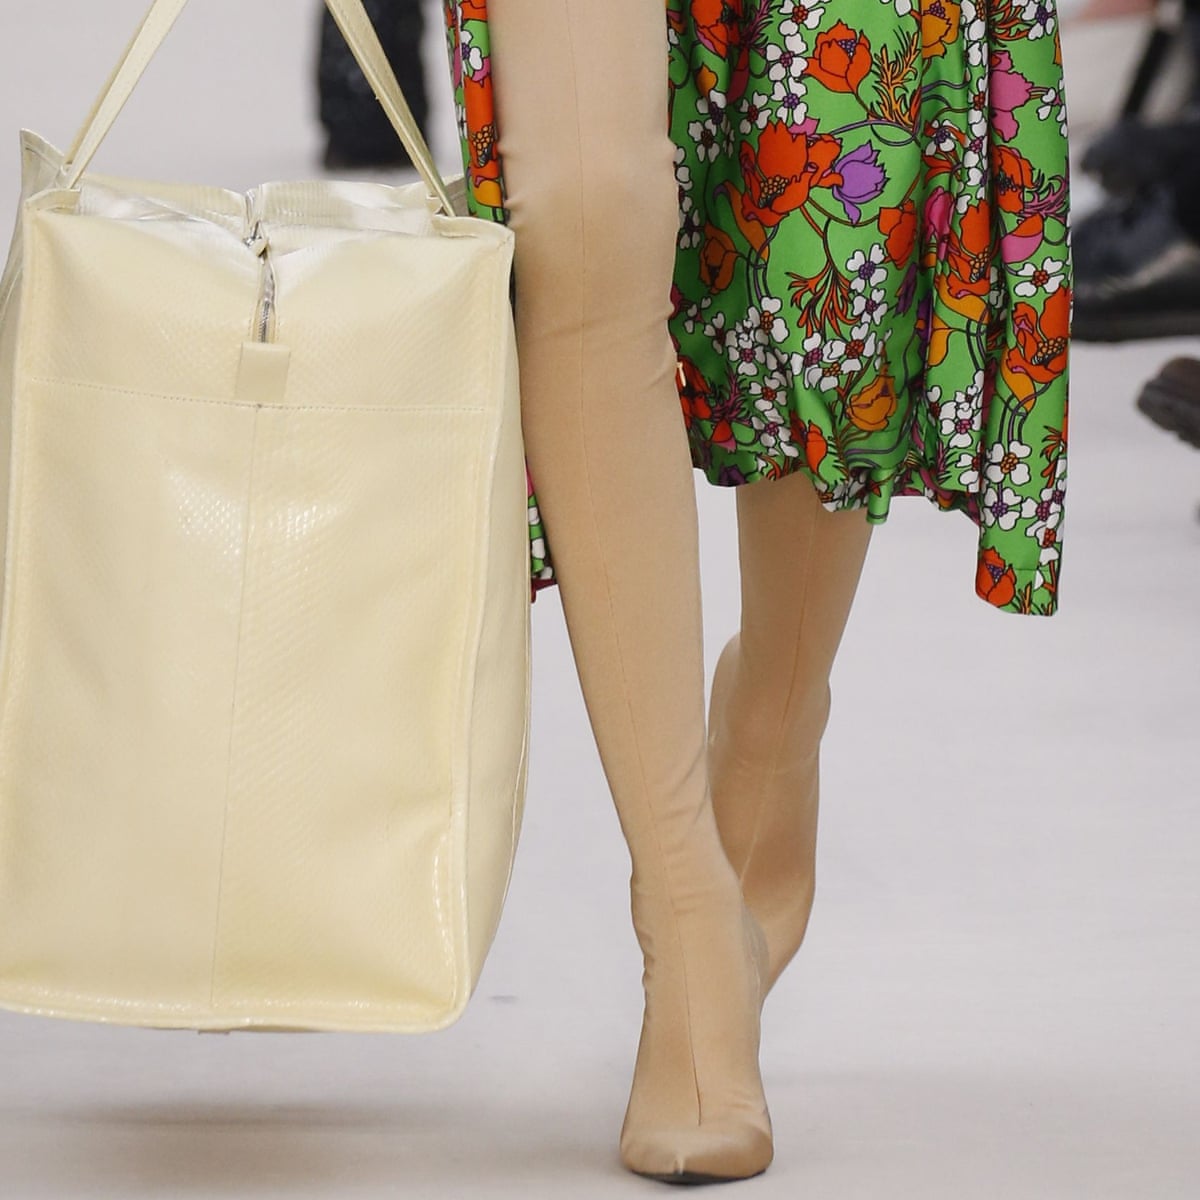 Keizer Geen De slaapkamer schoonmaken The Balenciaga bag challenge: because being a mannequin is not viral enough  | Fashion | The Guardian